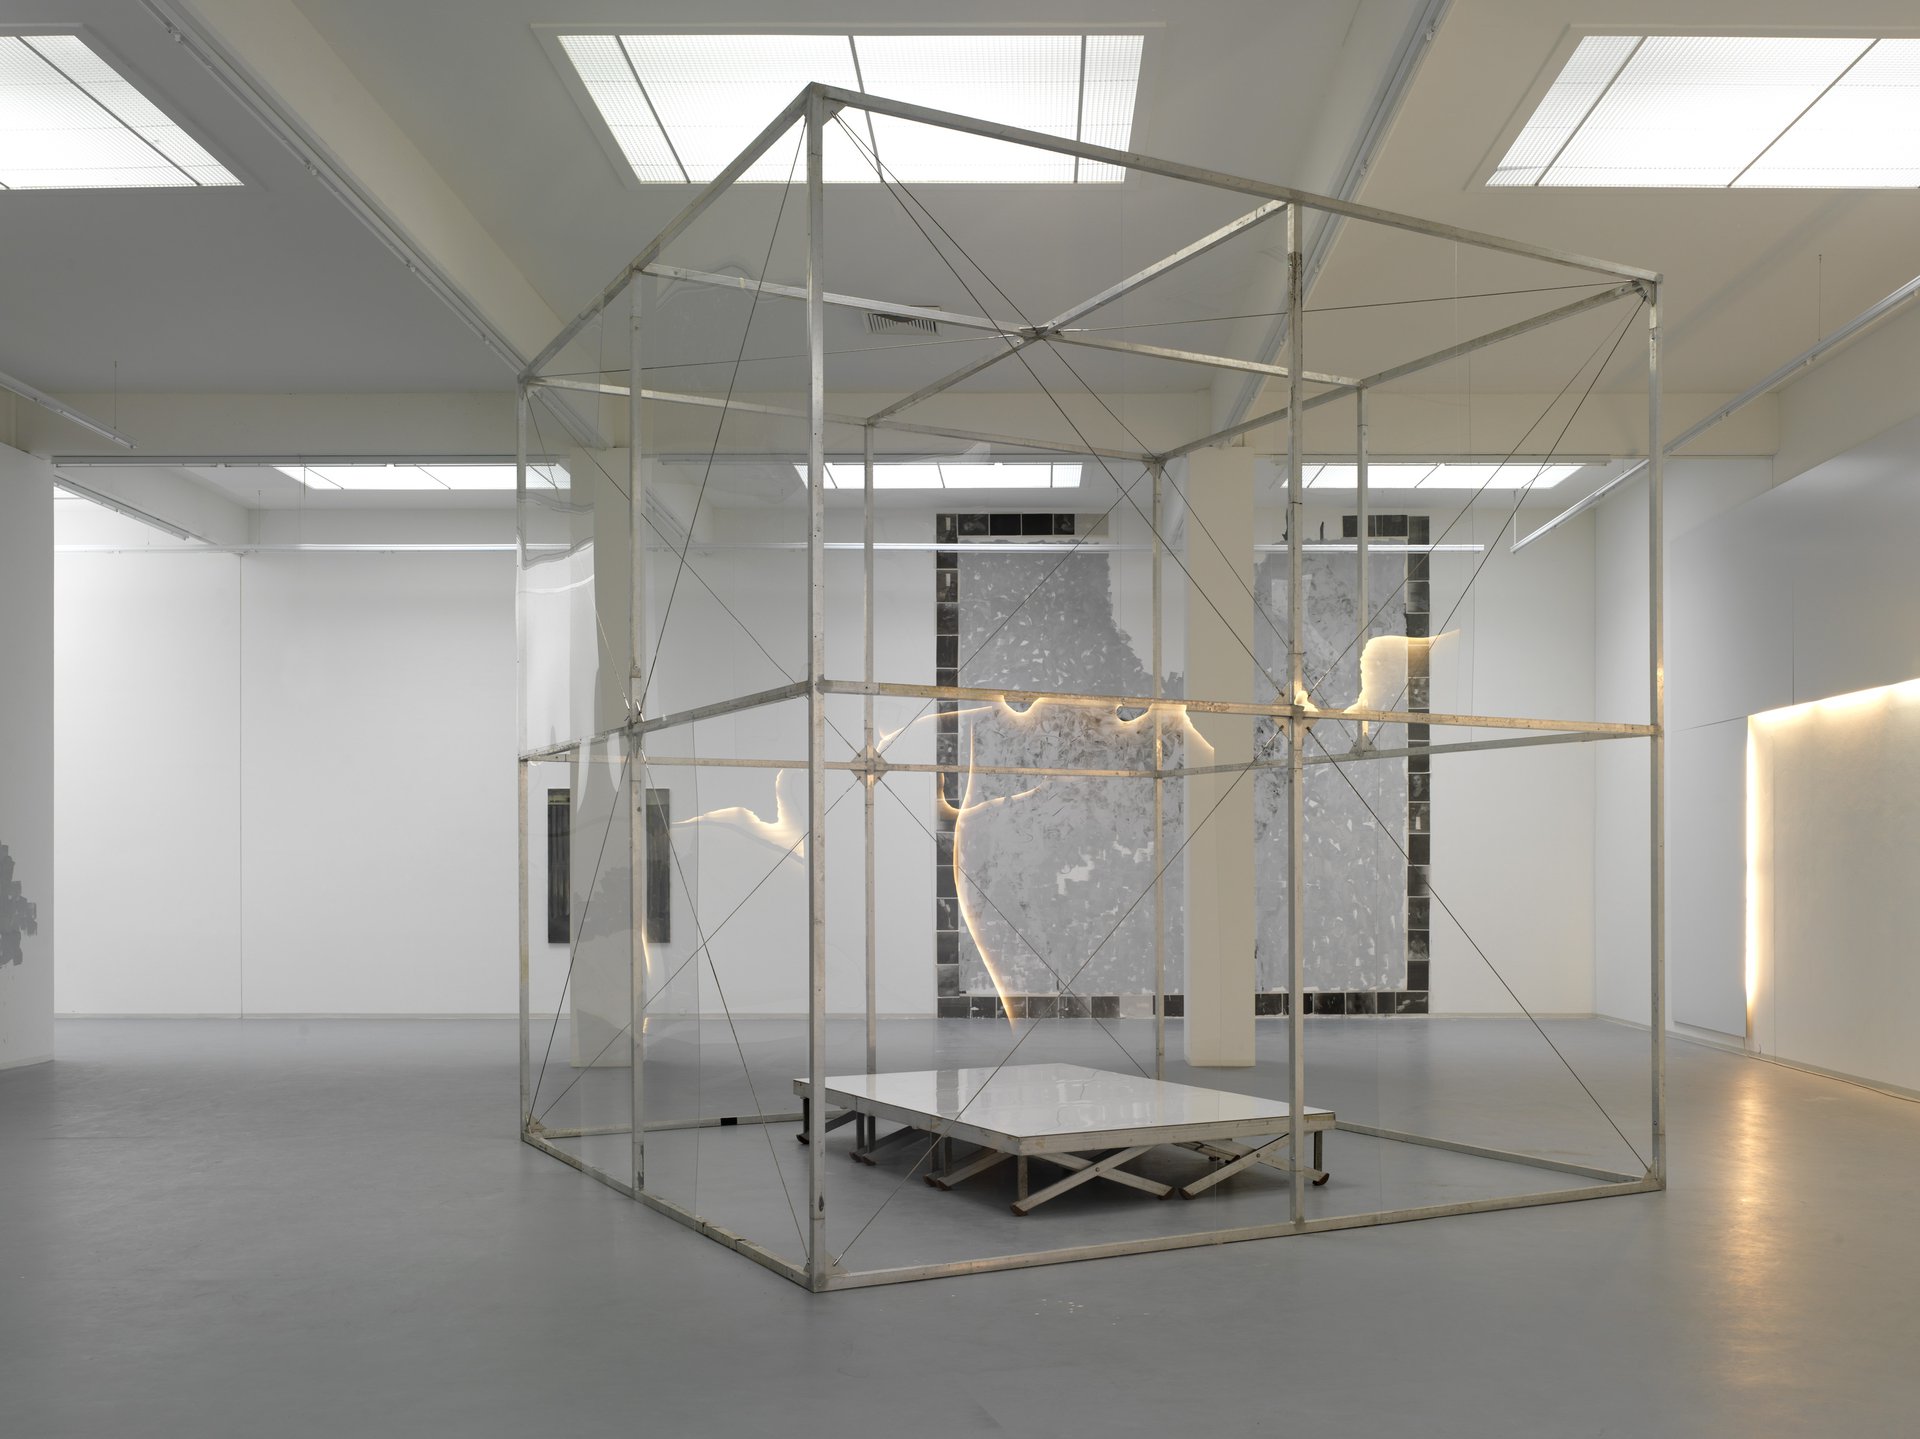 Matthieu Ronsse, Installation view, Bonner Kunstverein, 2010. Photo: Achim Kukulies